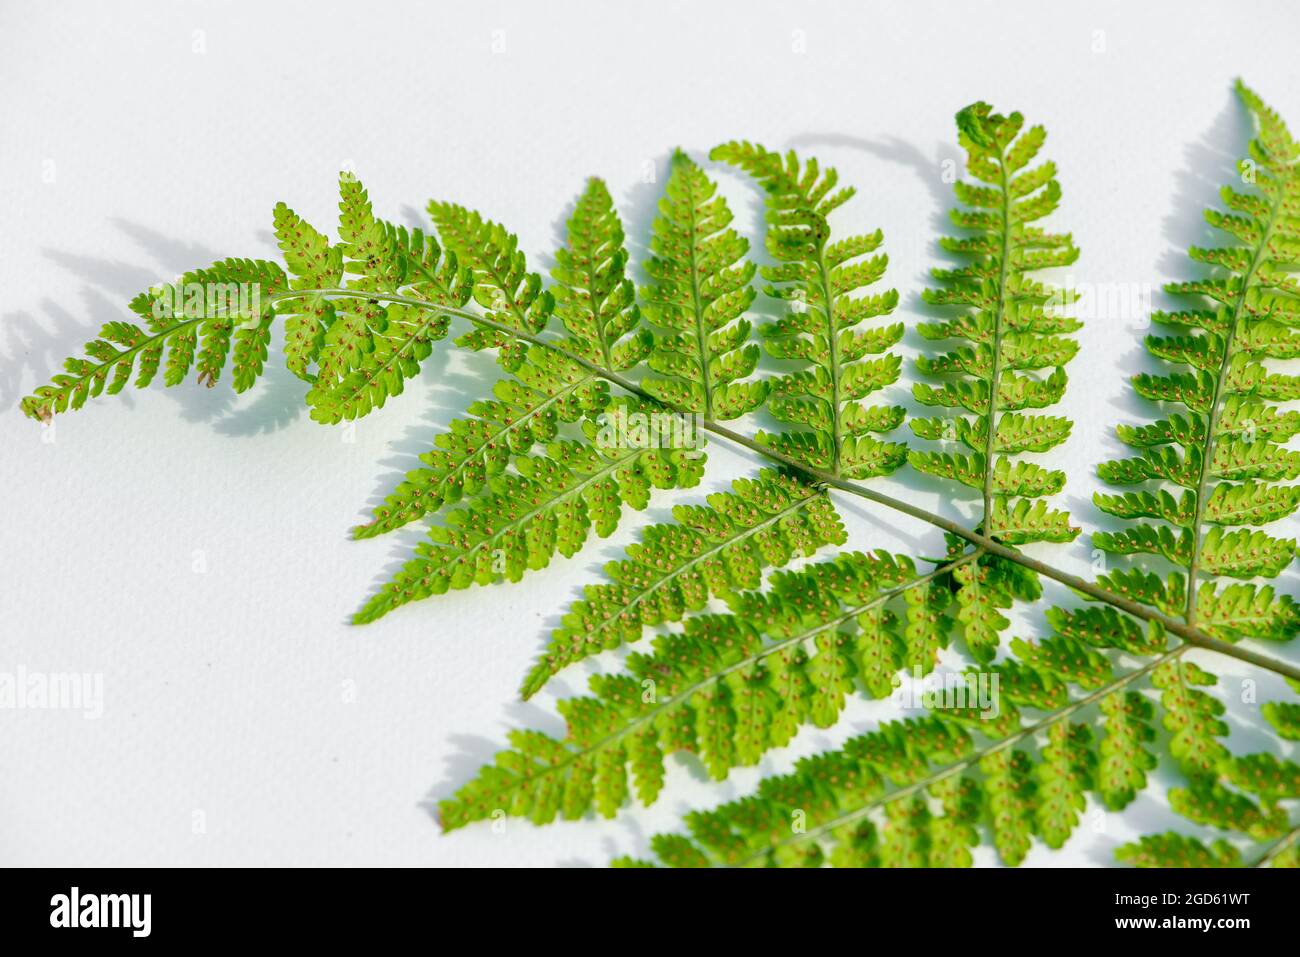 Wood fern, Male fern, Dryopteris leaf close up isolated on white background. Stock Photo